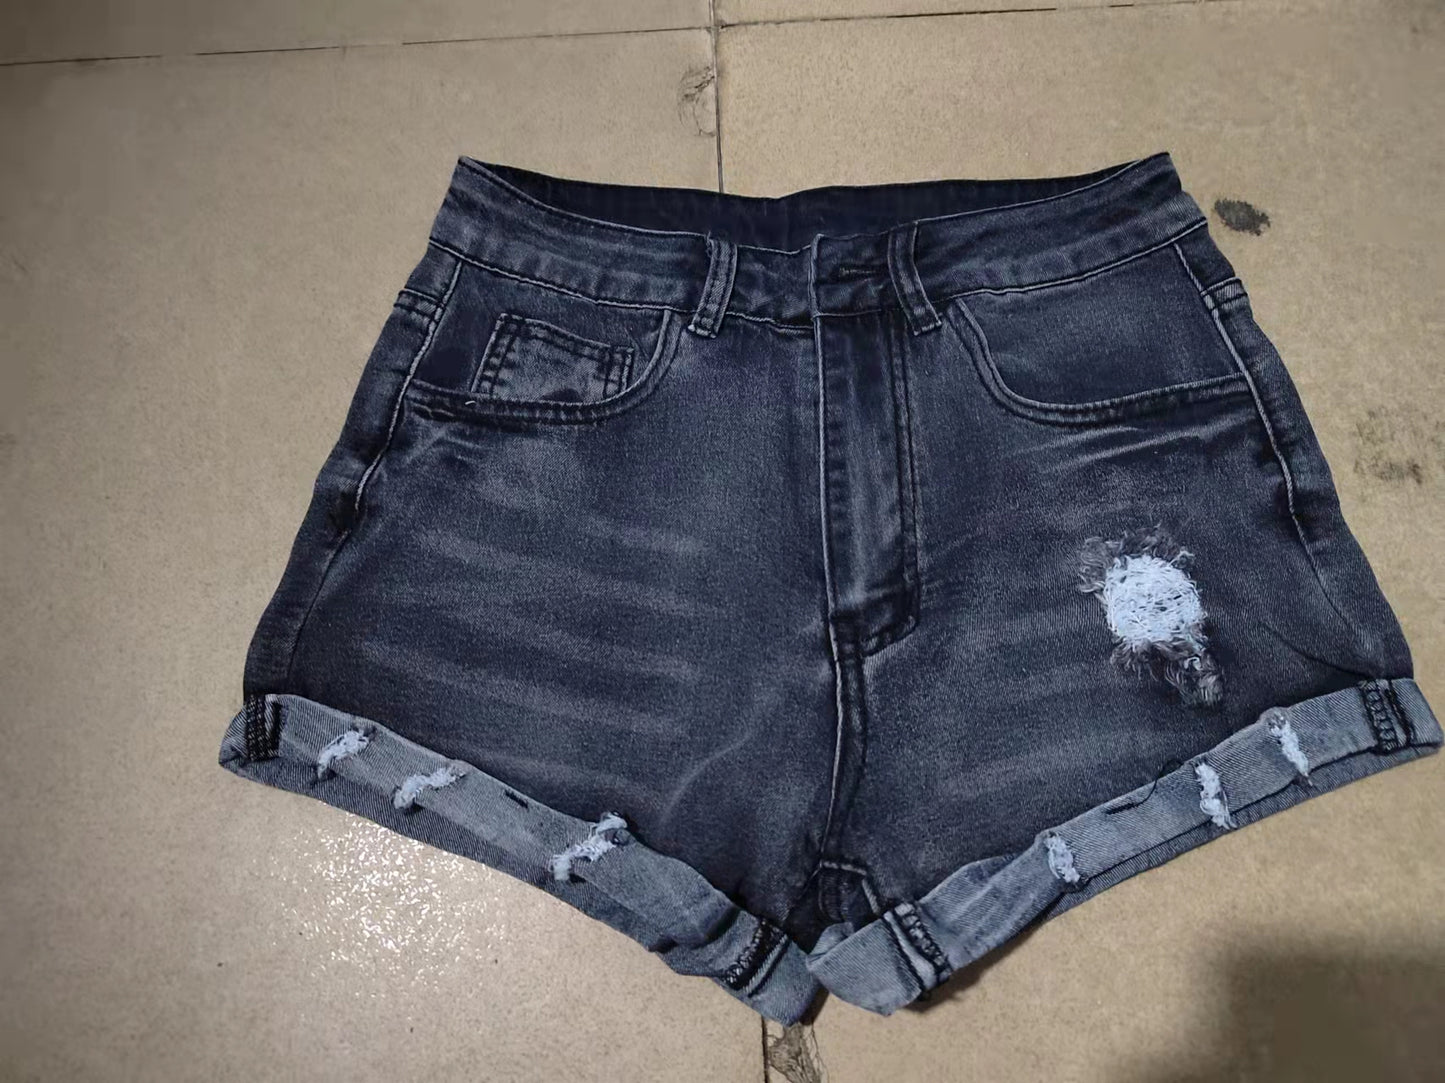 Ripped Sexy Denim Shorts